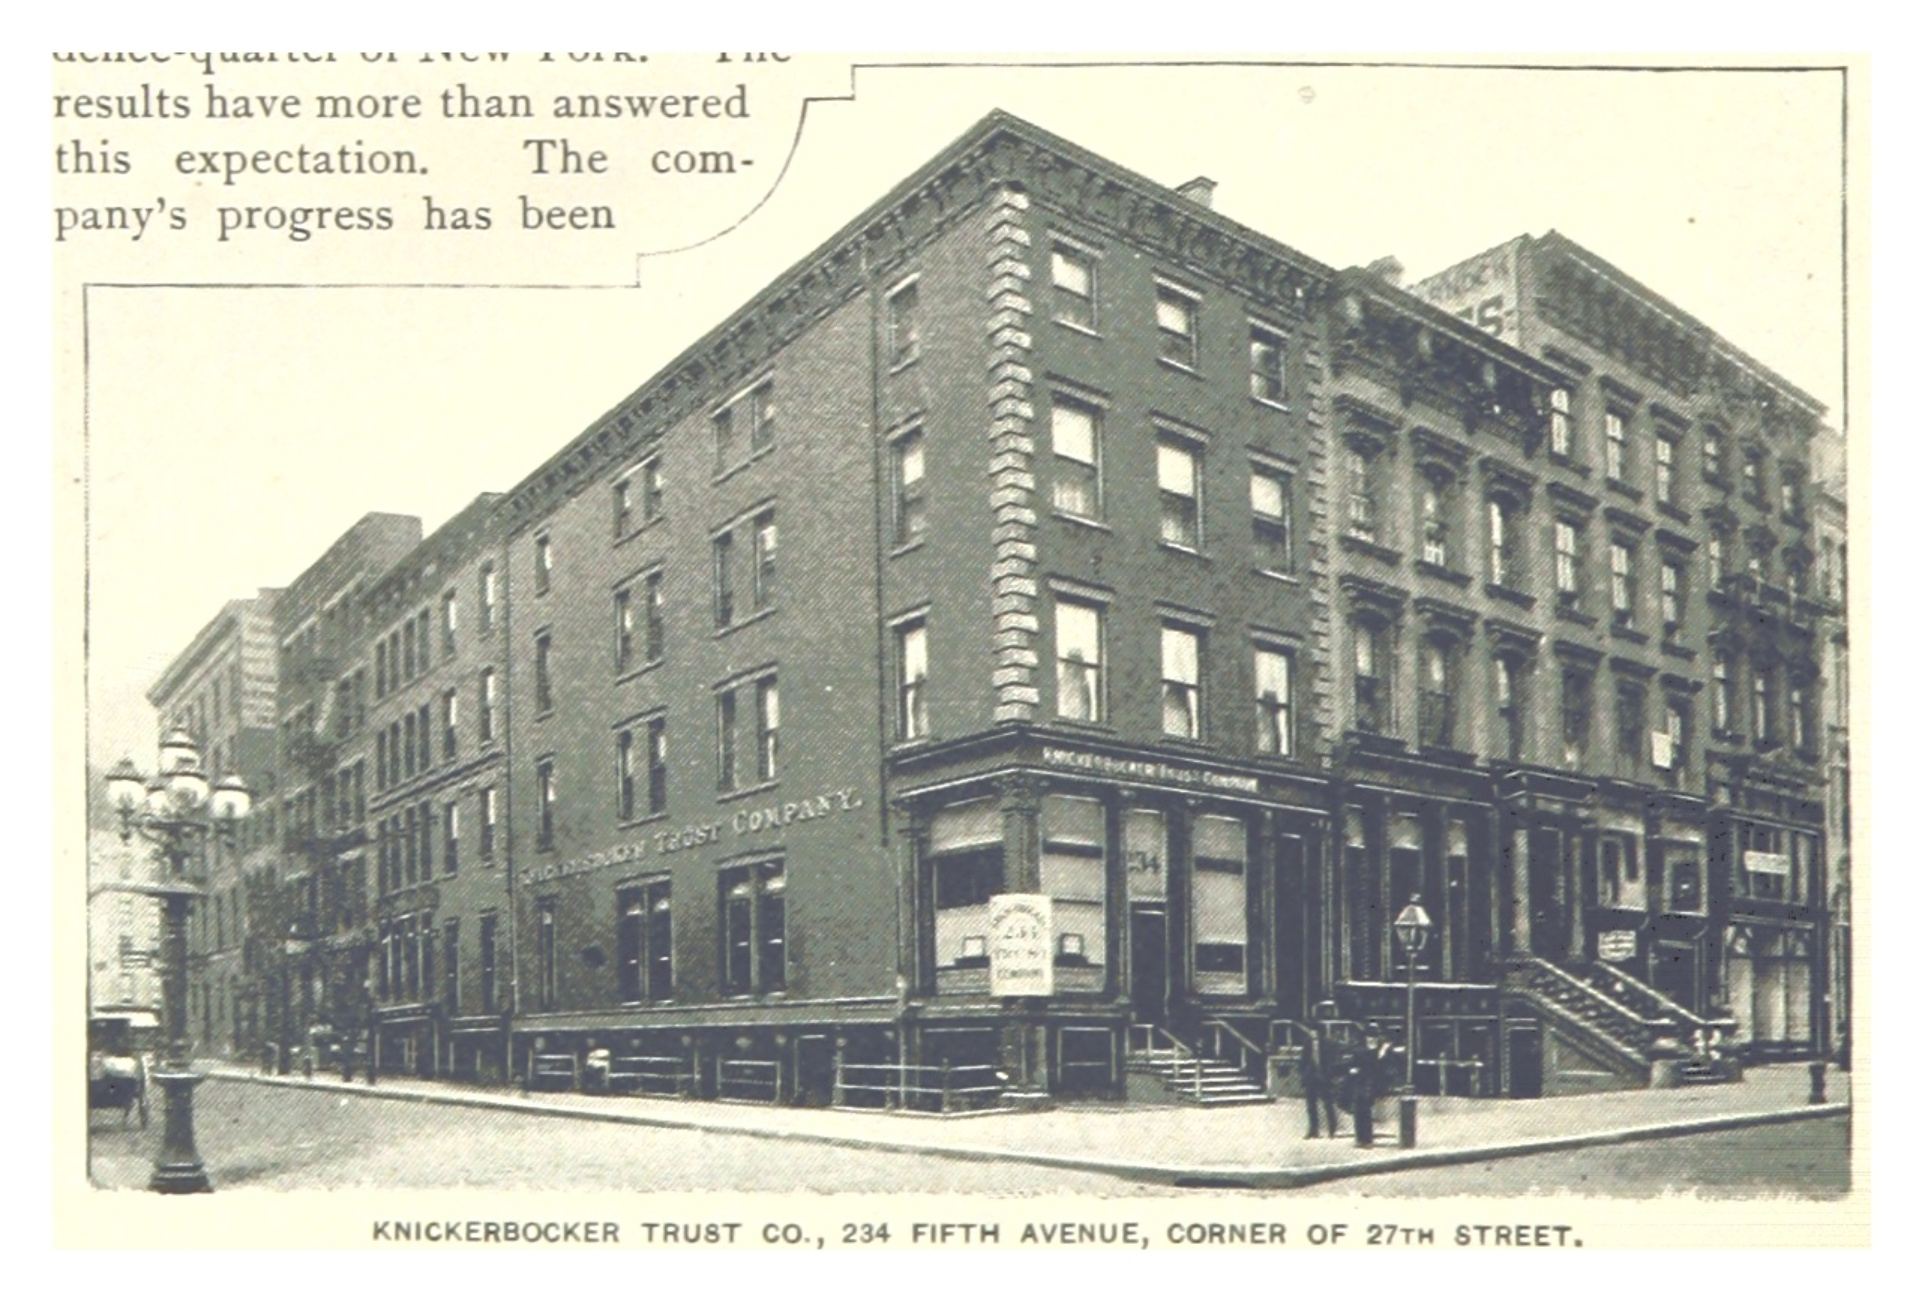 The Knickerbocker Trust Co. ซึ่งตั้งอยู่ที่ Fifth Avenue และ 27th Street ซึ่งเป็นจุดตัดที่ Arnold ได้รับรายงานล่าสุด